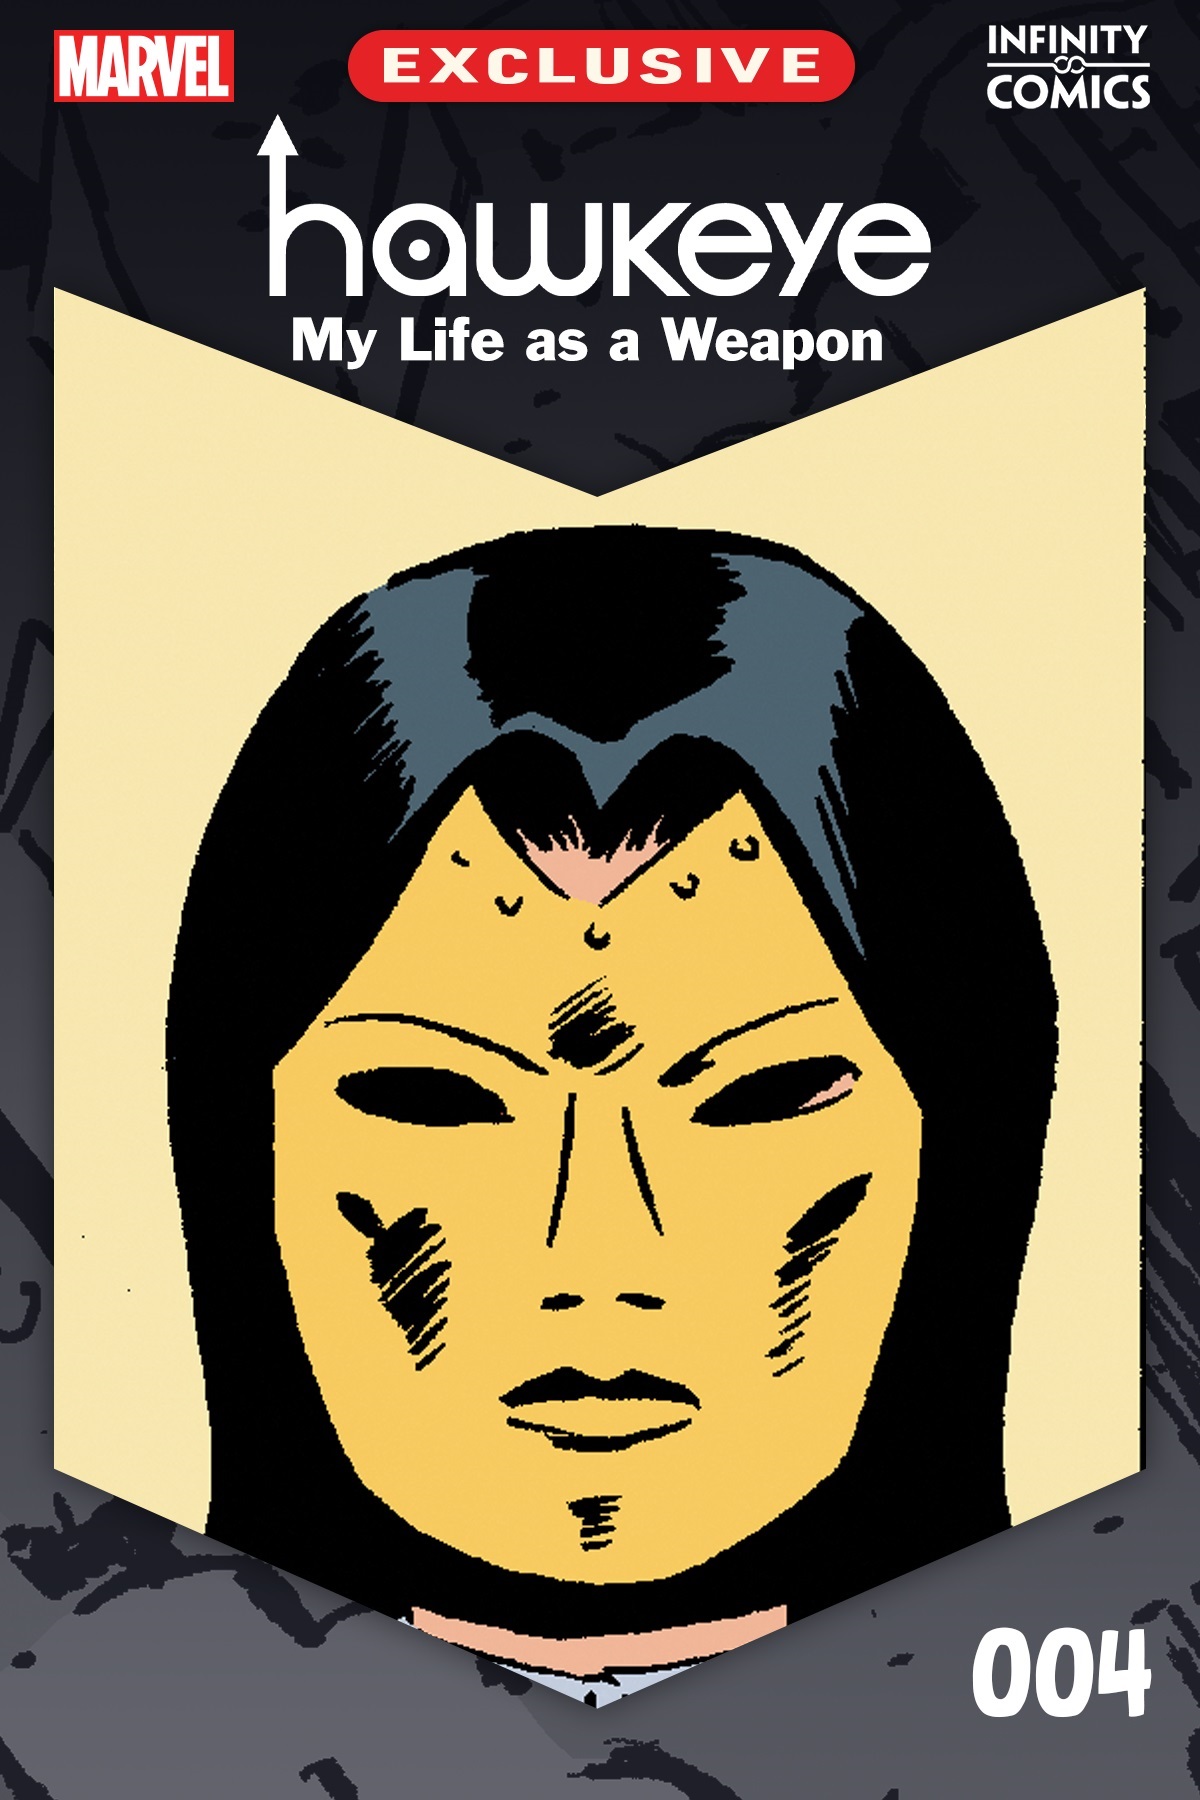 Hawkeye: My Life as a Weapon Infinity Comic (2021) #4